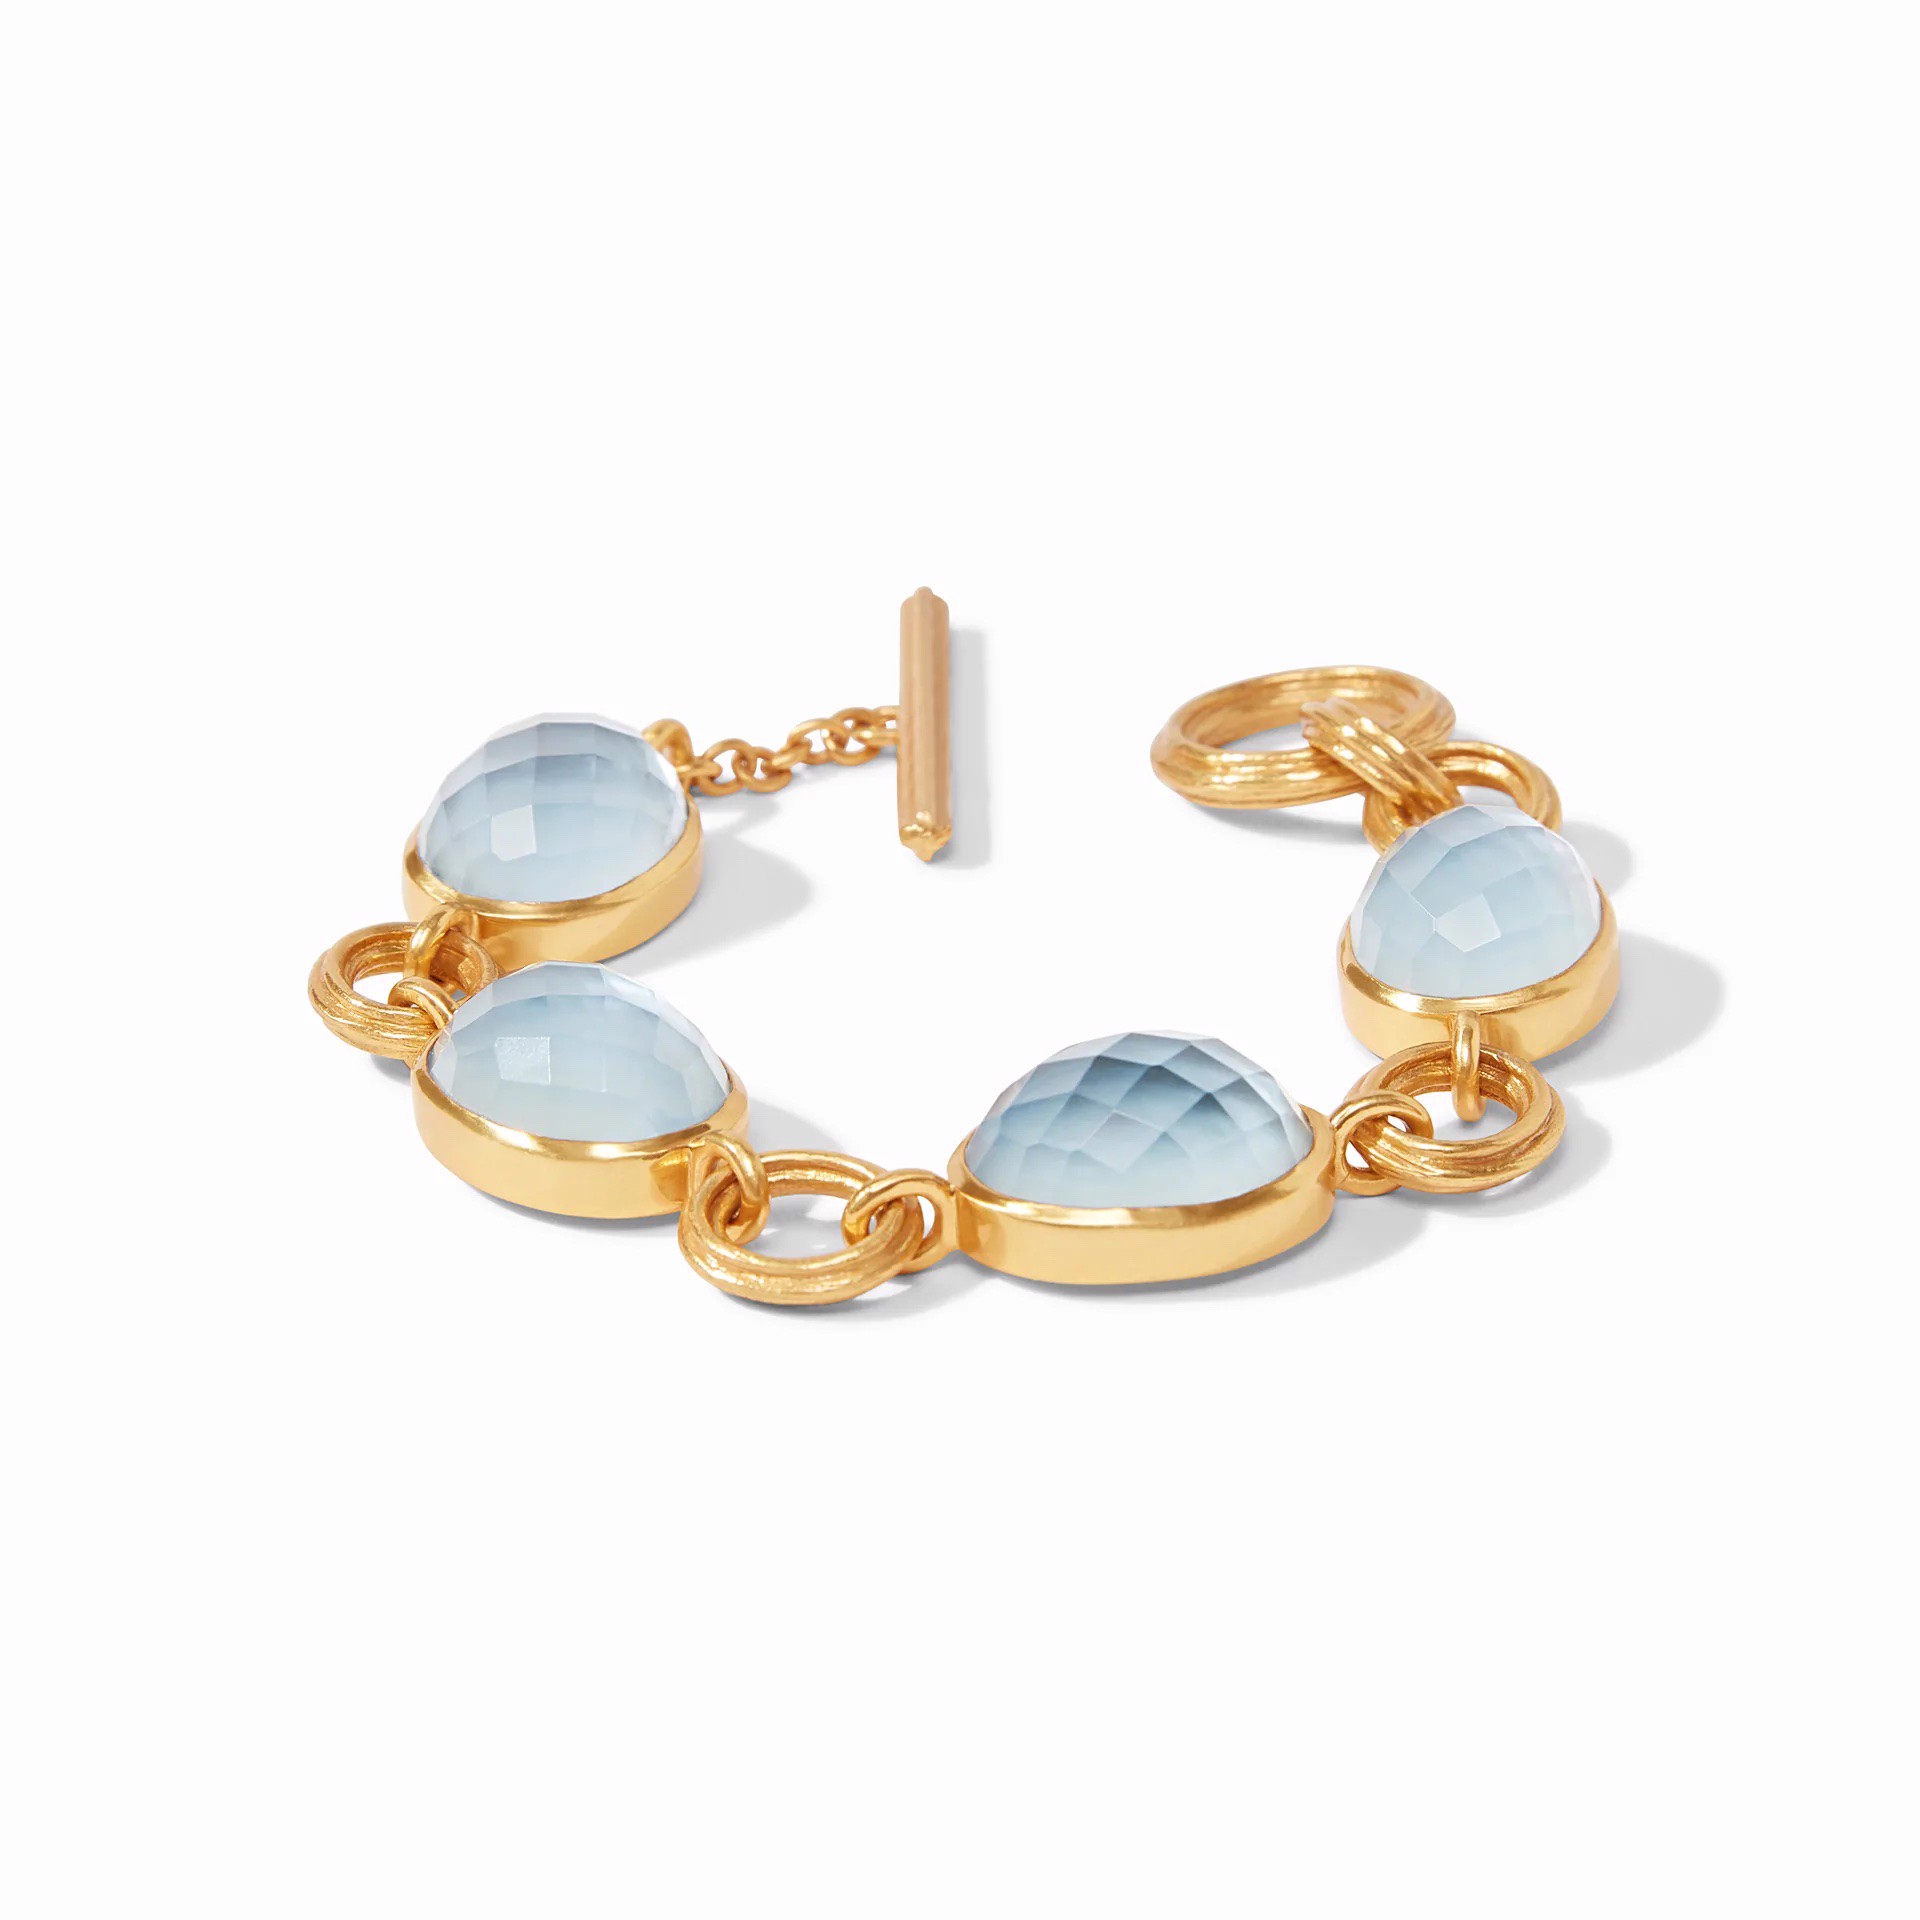 Barcelona Bracelet - Iridescent Chalcedony Blue by Julie Vos